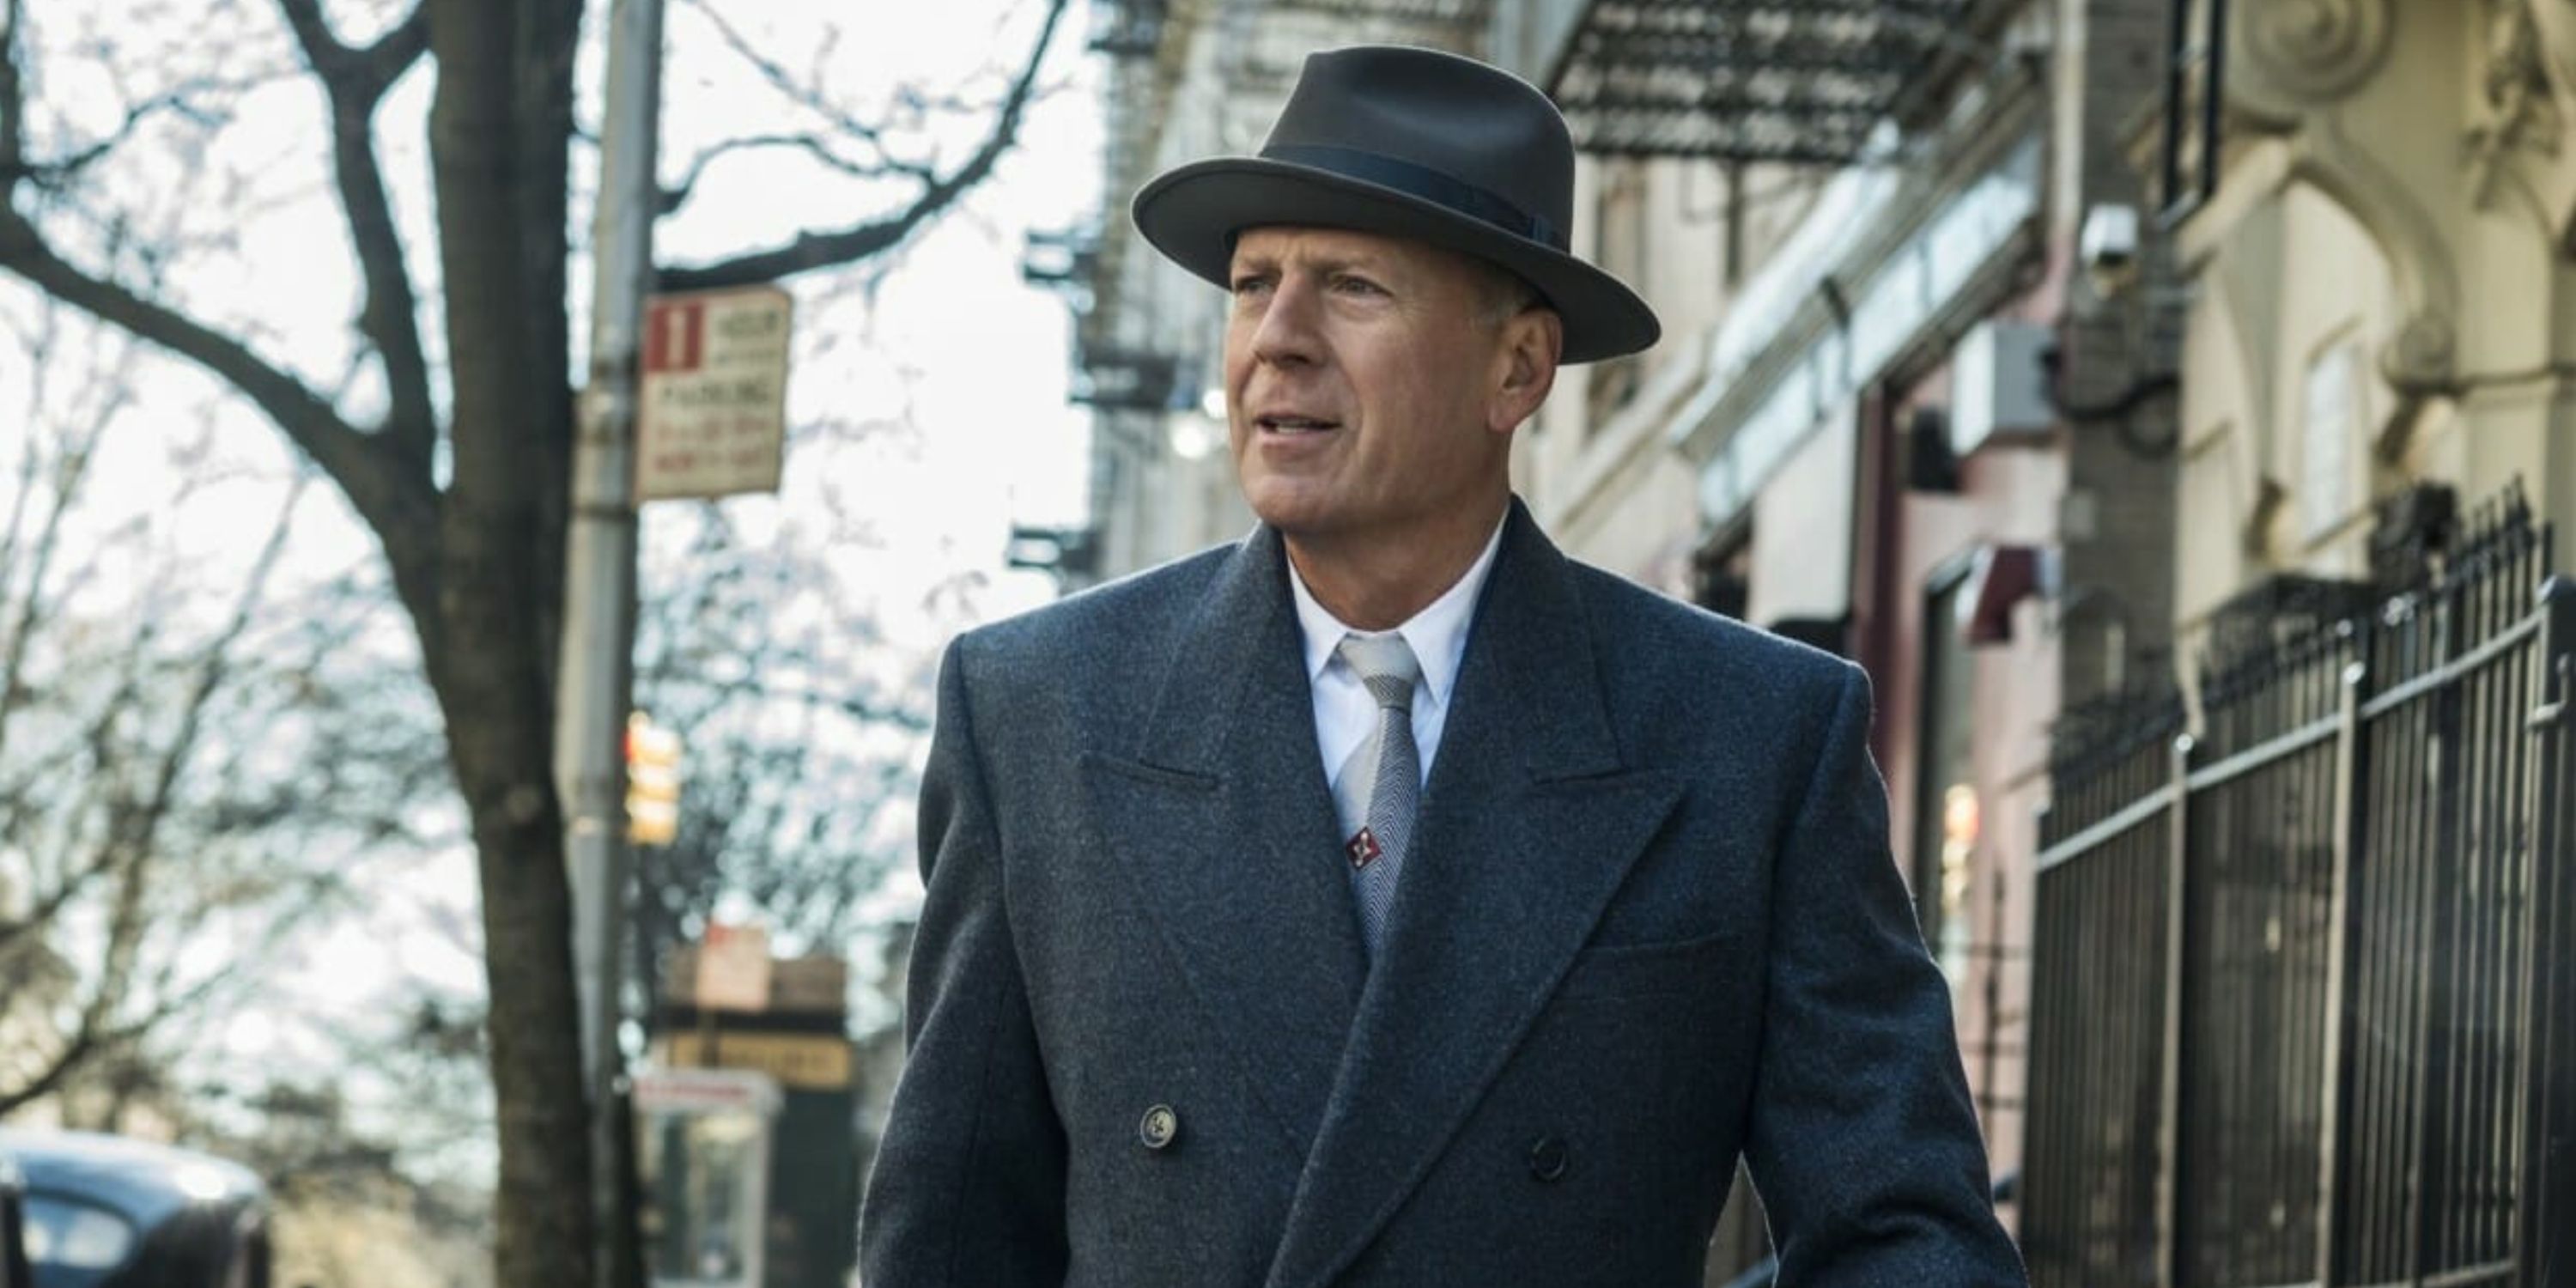 man in hat & suit standing on sidewalk